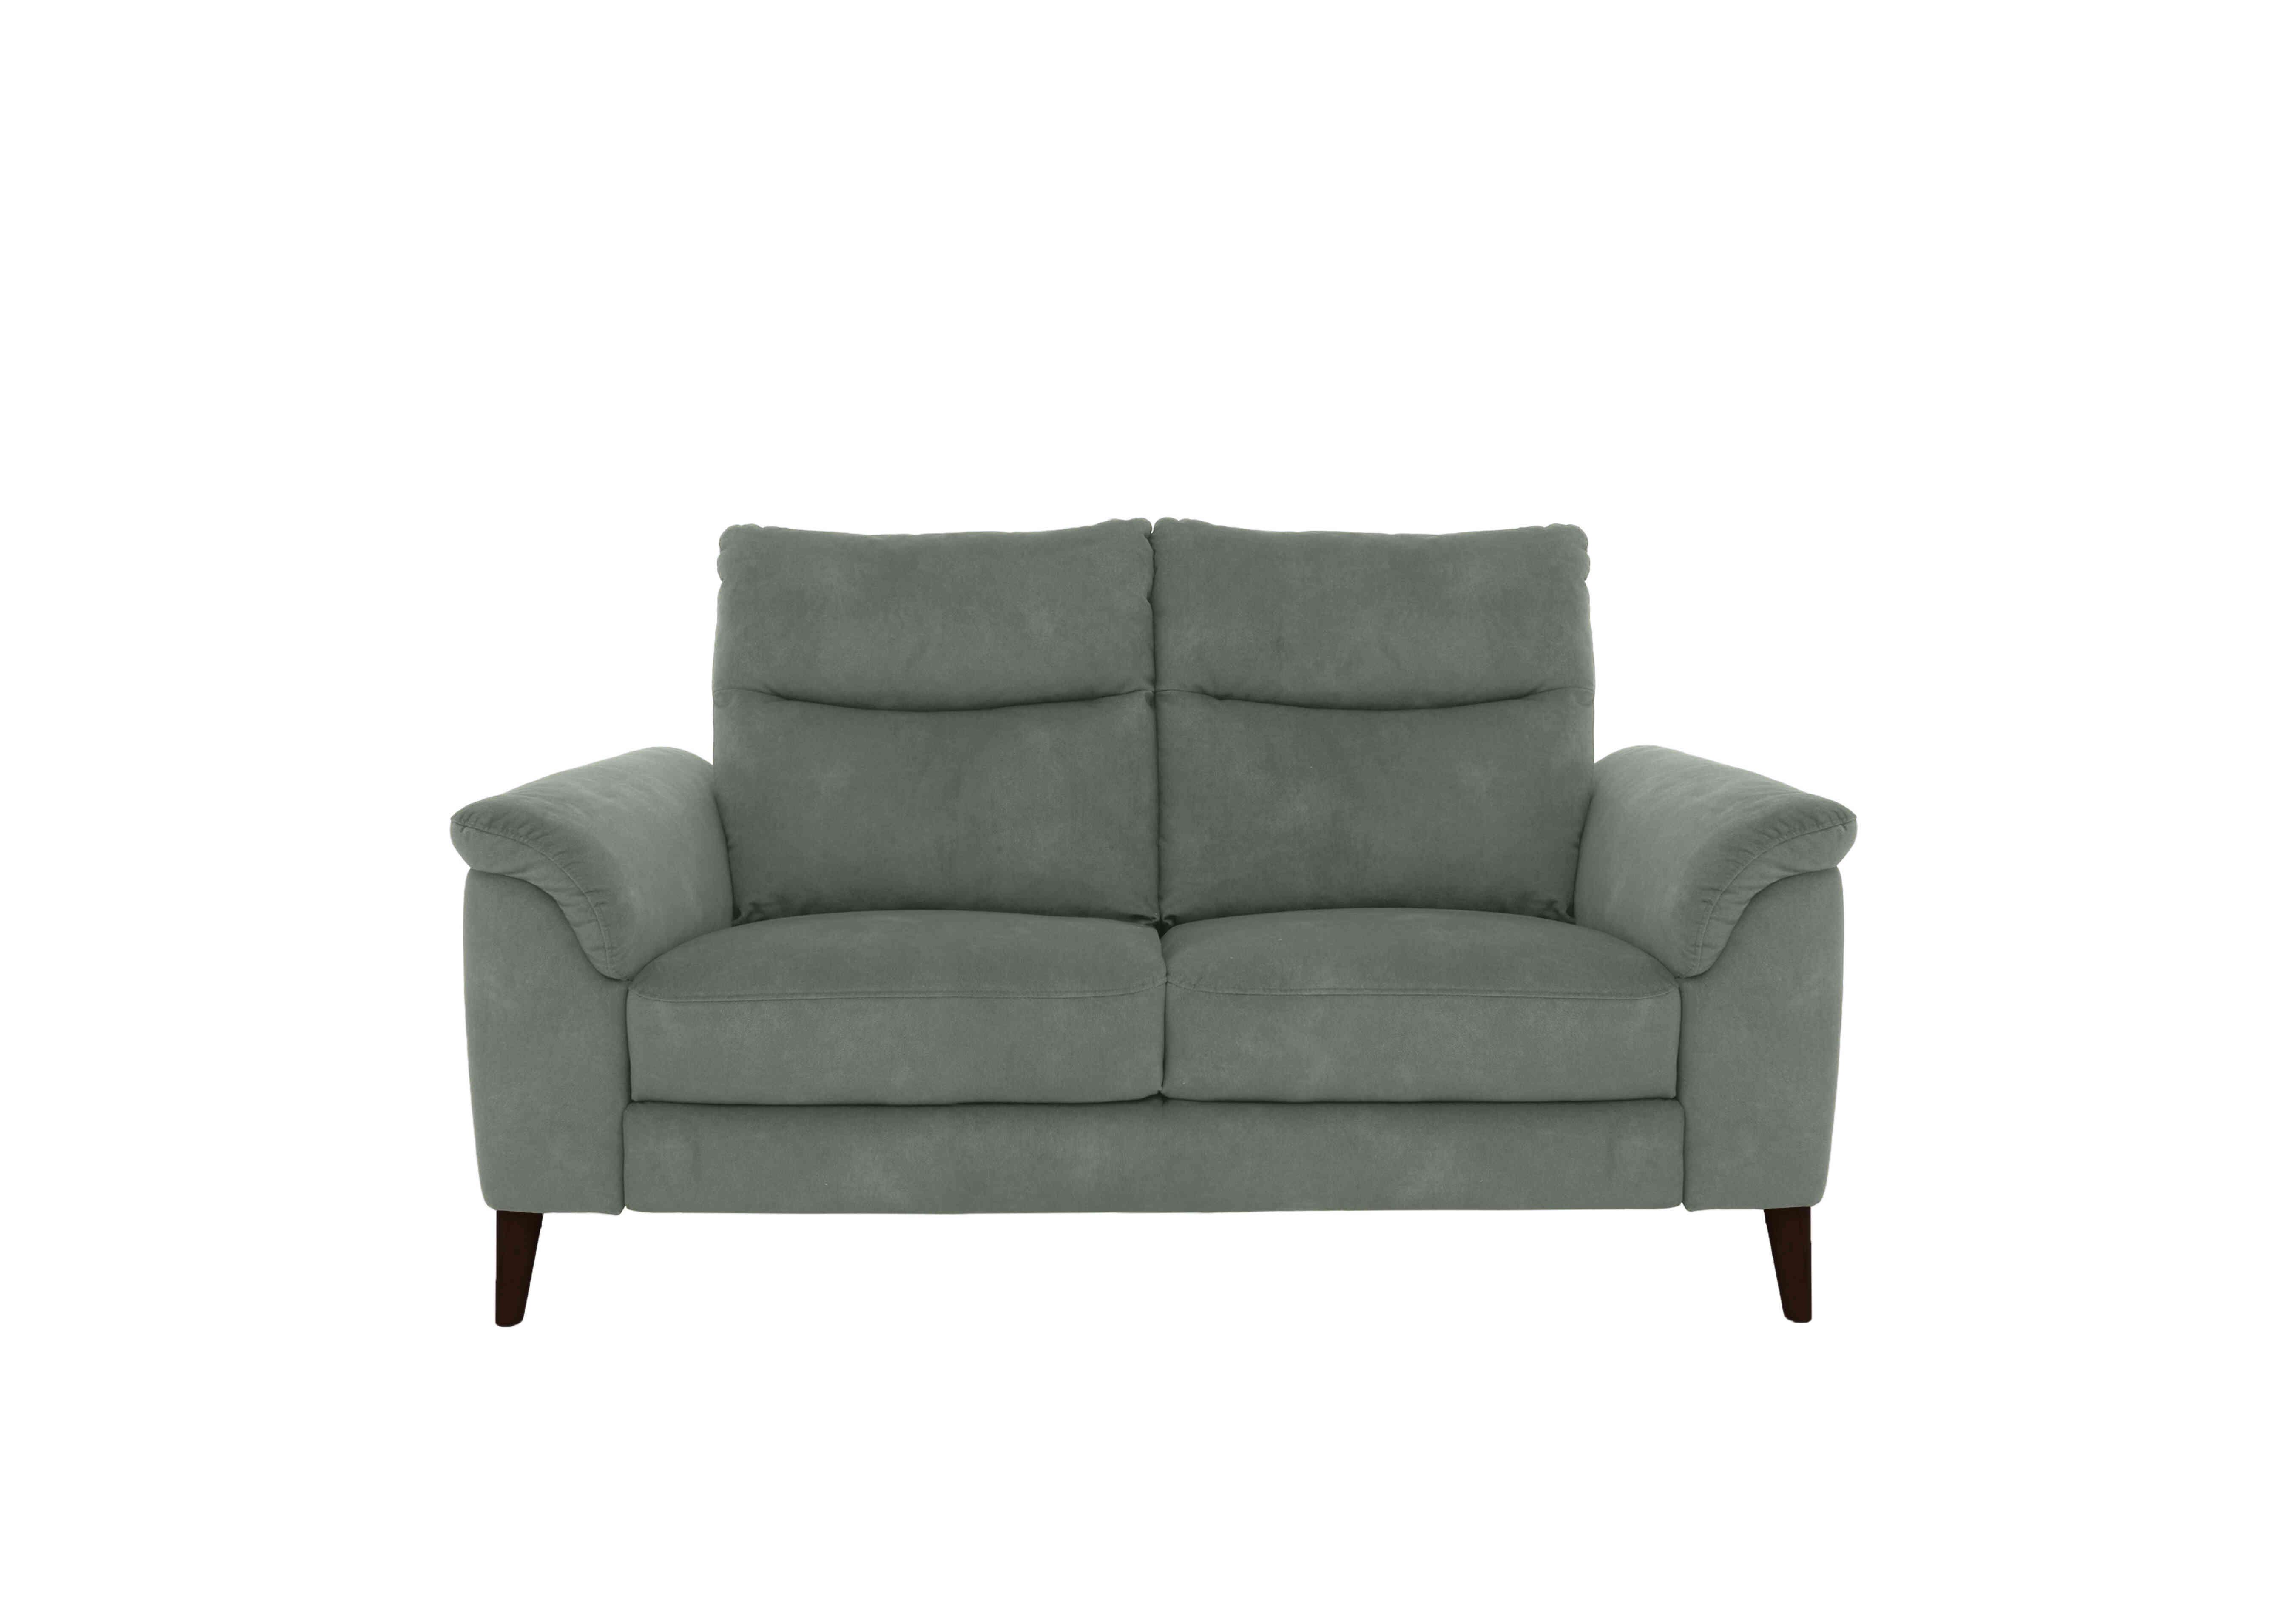 Morgan 2 Seater Fabric Sofa in Fern Dexter 14 43514 on Furniture Village